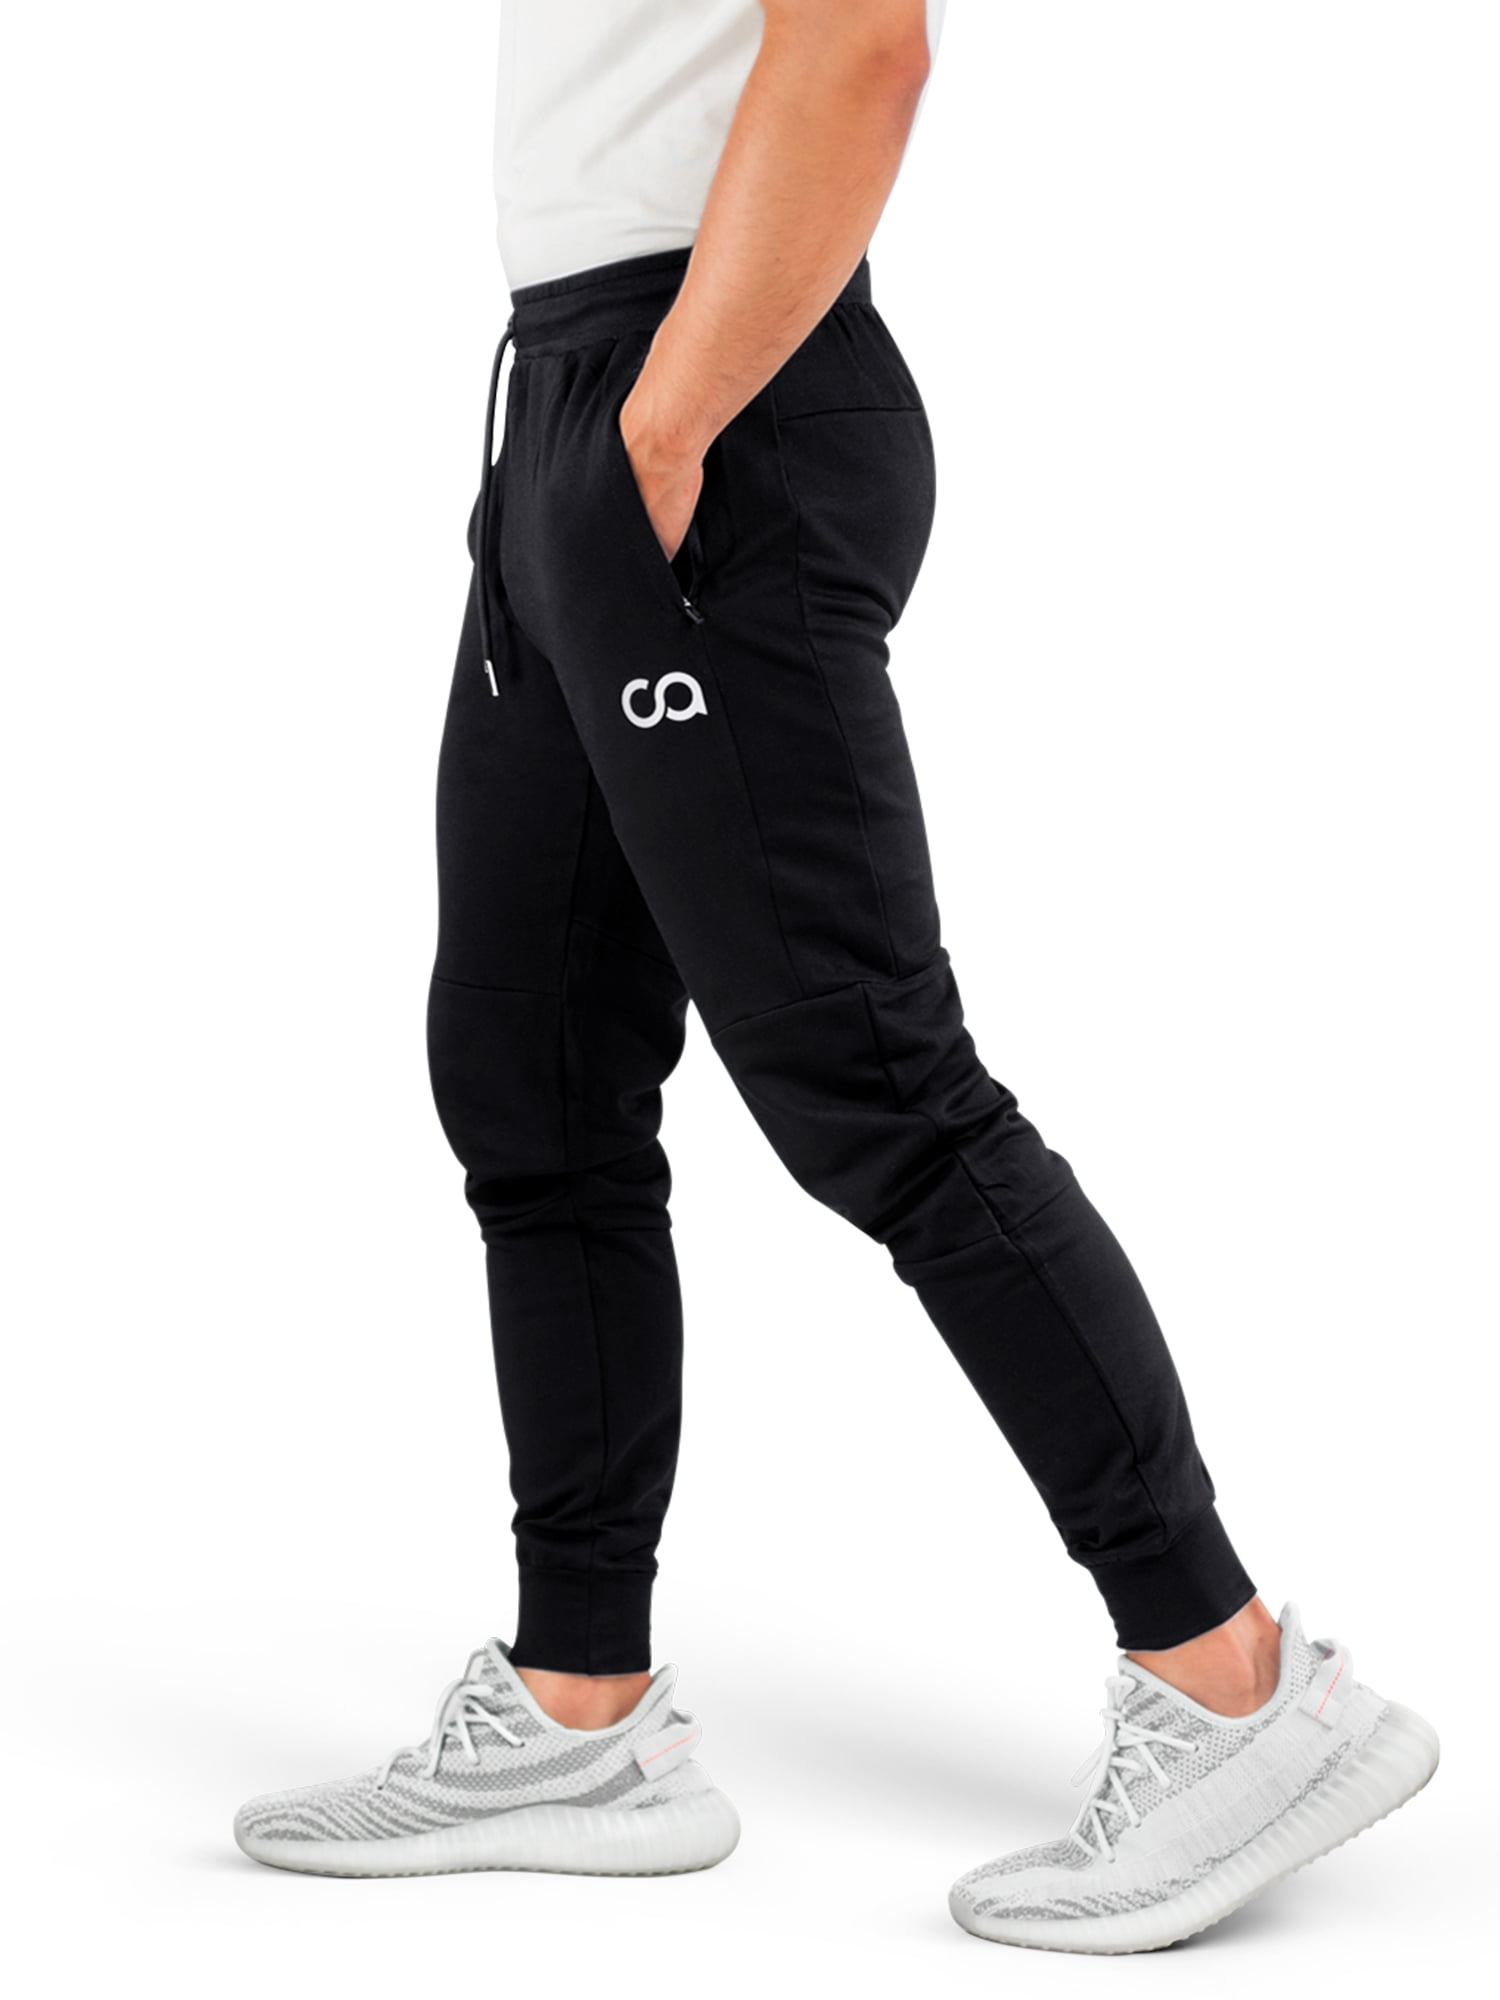 Mens Sweatpants F_Gotal Men’s Casual Solid Straight Fit Elastic Waist Sports Jogger Pants Trouser with Zipper Pockets